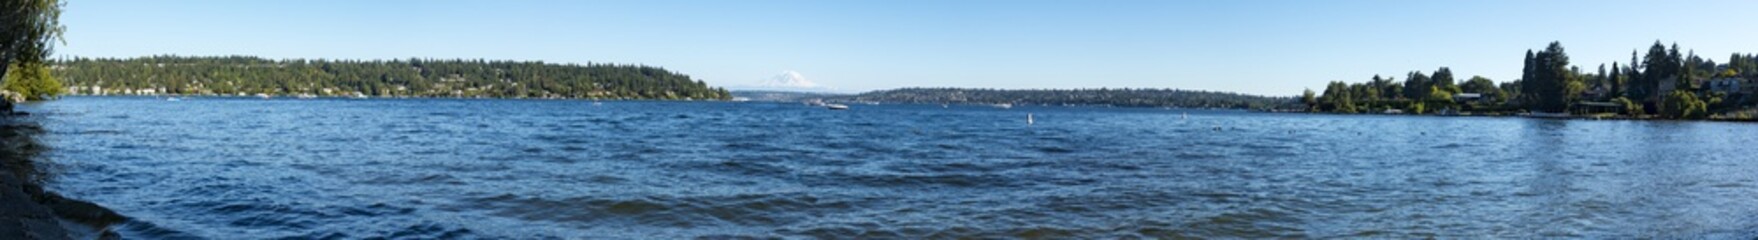 Panoramic View of Lake Washington and Mt Rainier on a Blue Summer Day From Seward Park, Seattle, Washington